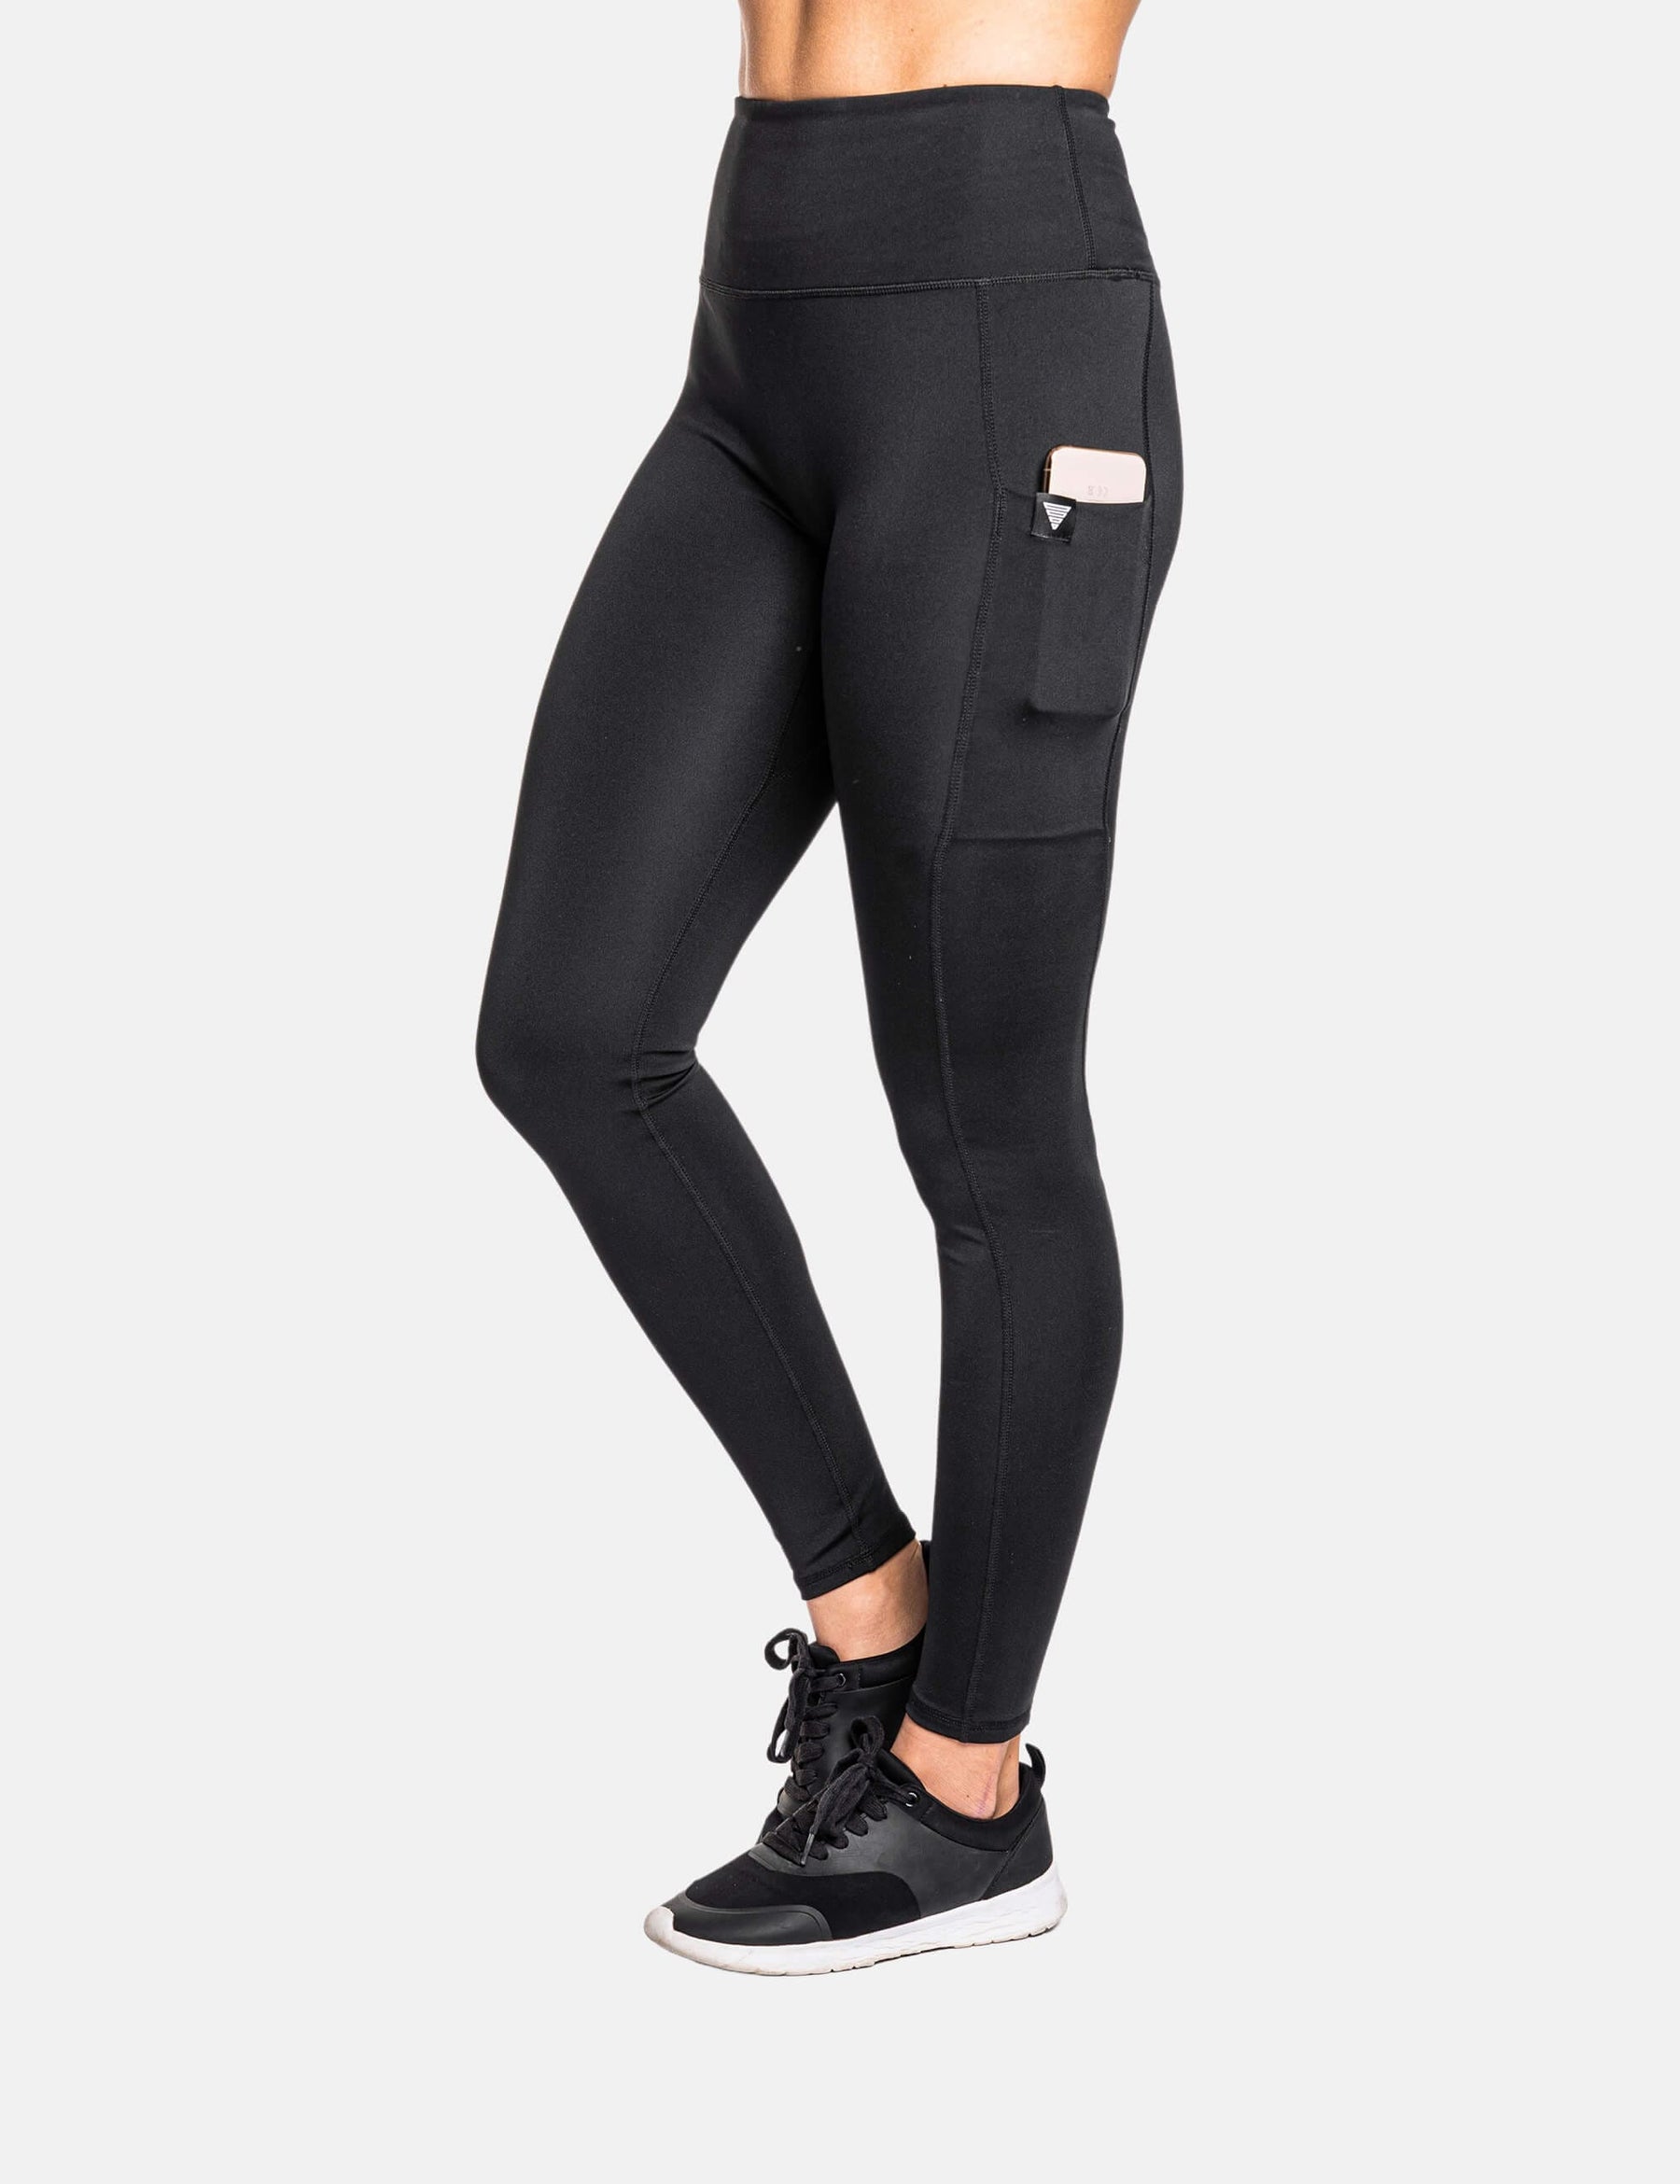 product photo of black calisthenics leggings. Front side